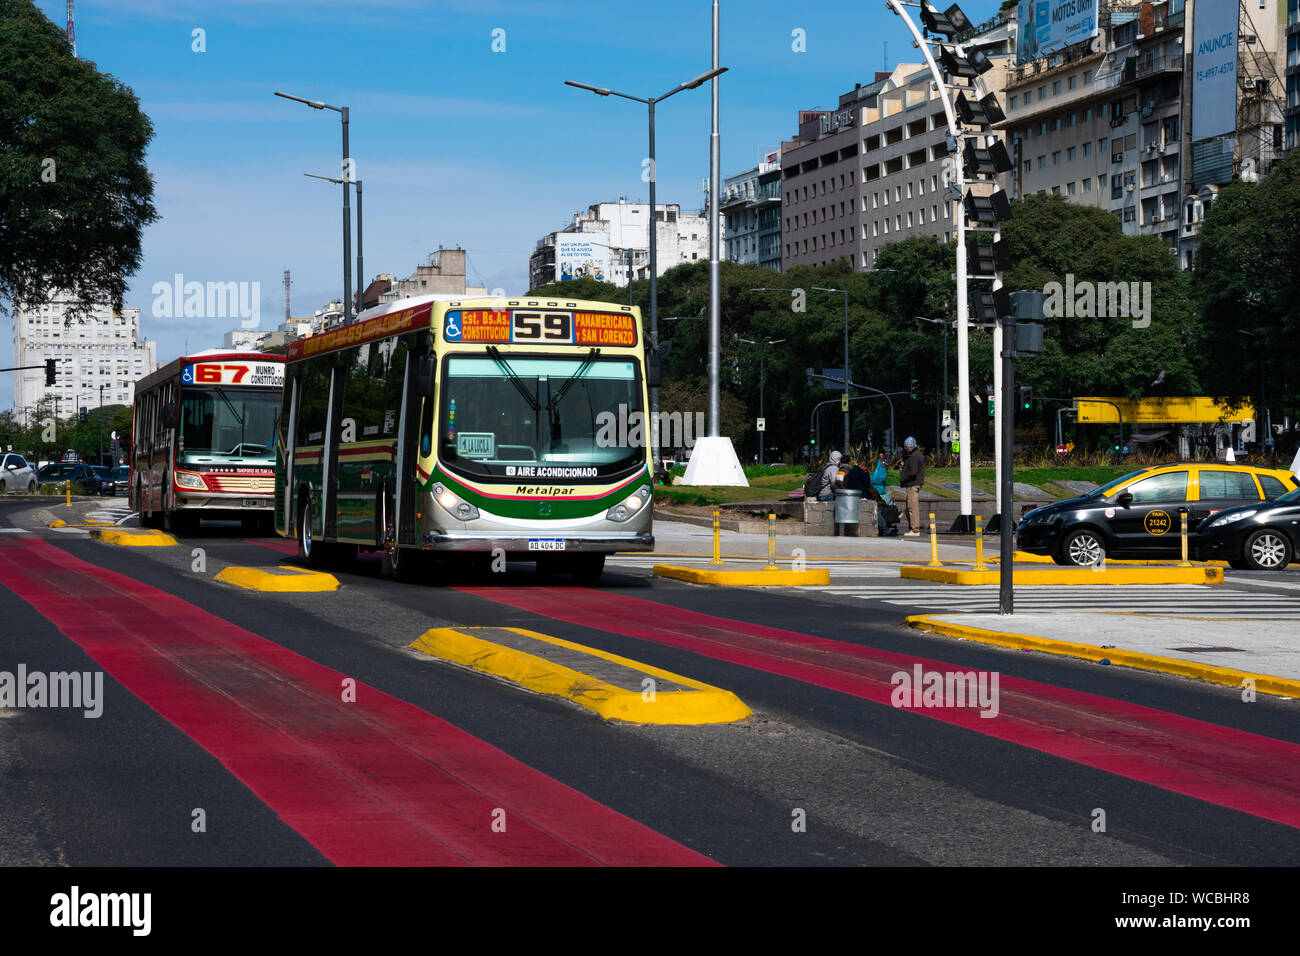 Buenos Aires, Argentina. August 19, 2019. Metrobus (Colectivo) exclusive lane on July 9 Avenue (Avenida 9 de Julio) Stock Photo